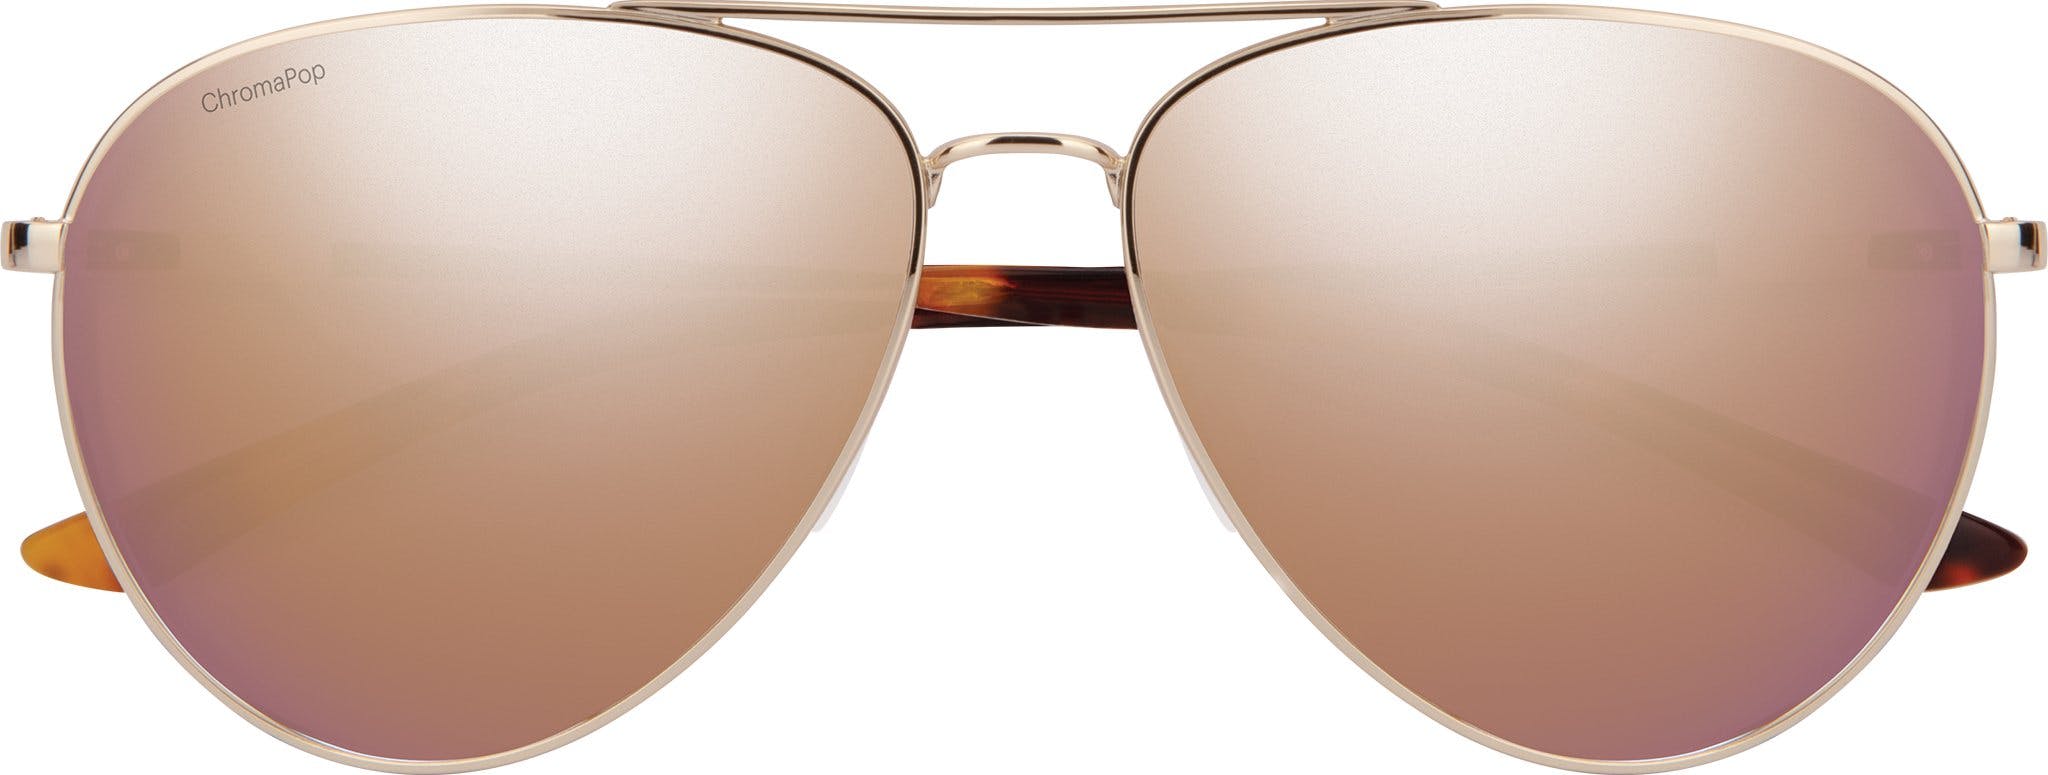 Product gallery image number 2 for product Layback Sunglasses - ChromaPop Polarized Lens - Unisex